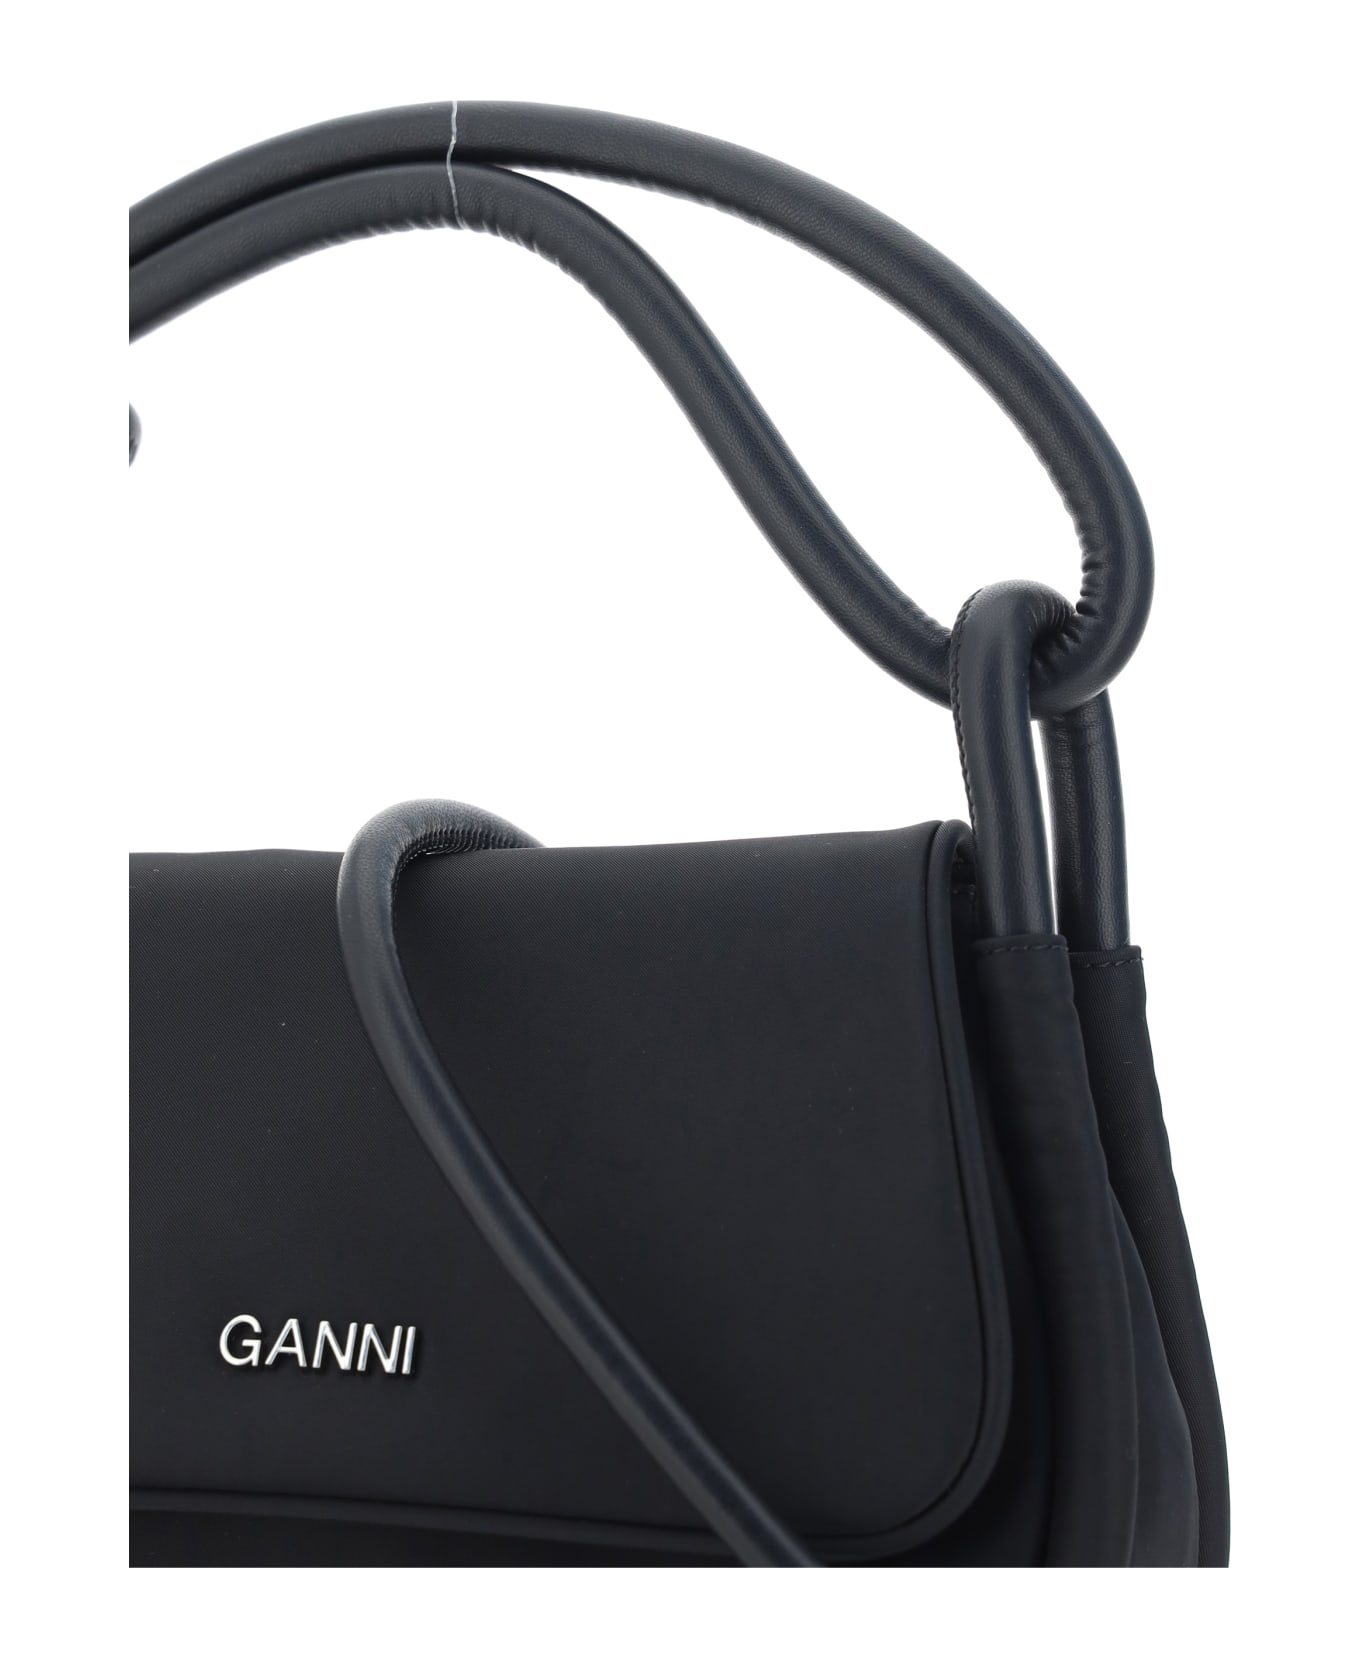 Ganni Knot Flap Handbag - Black